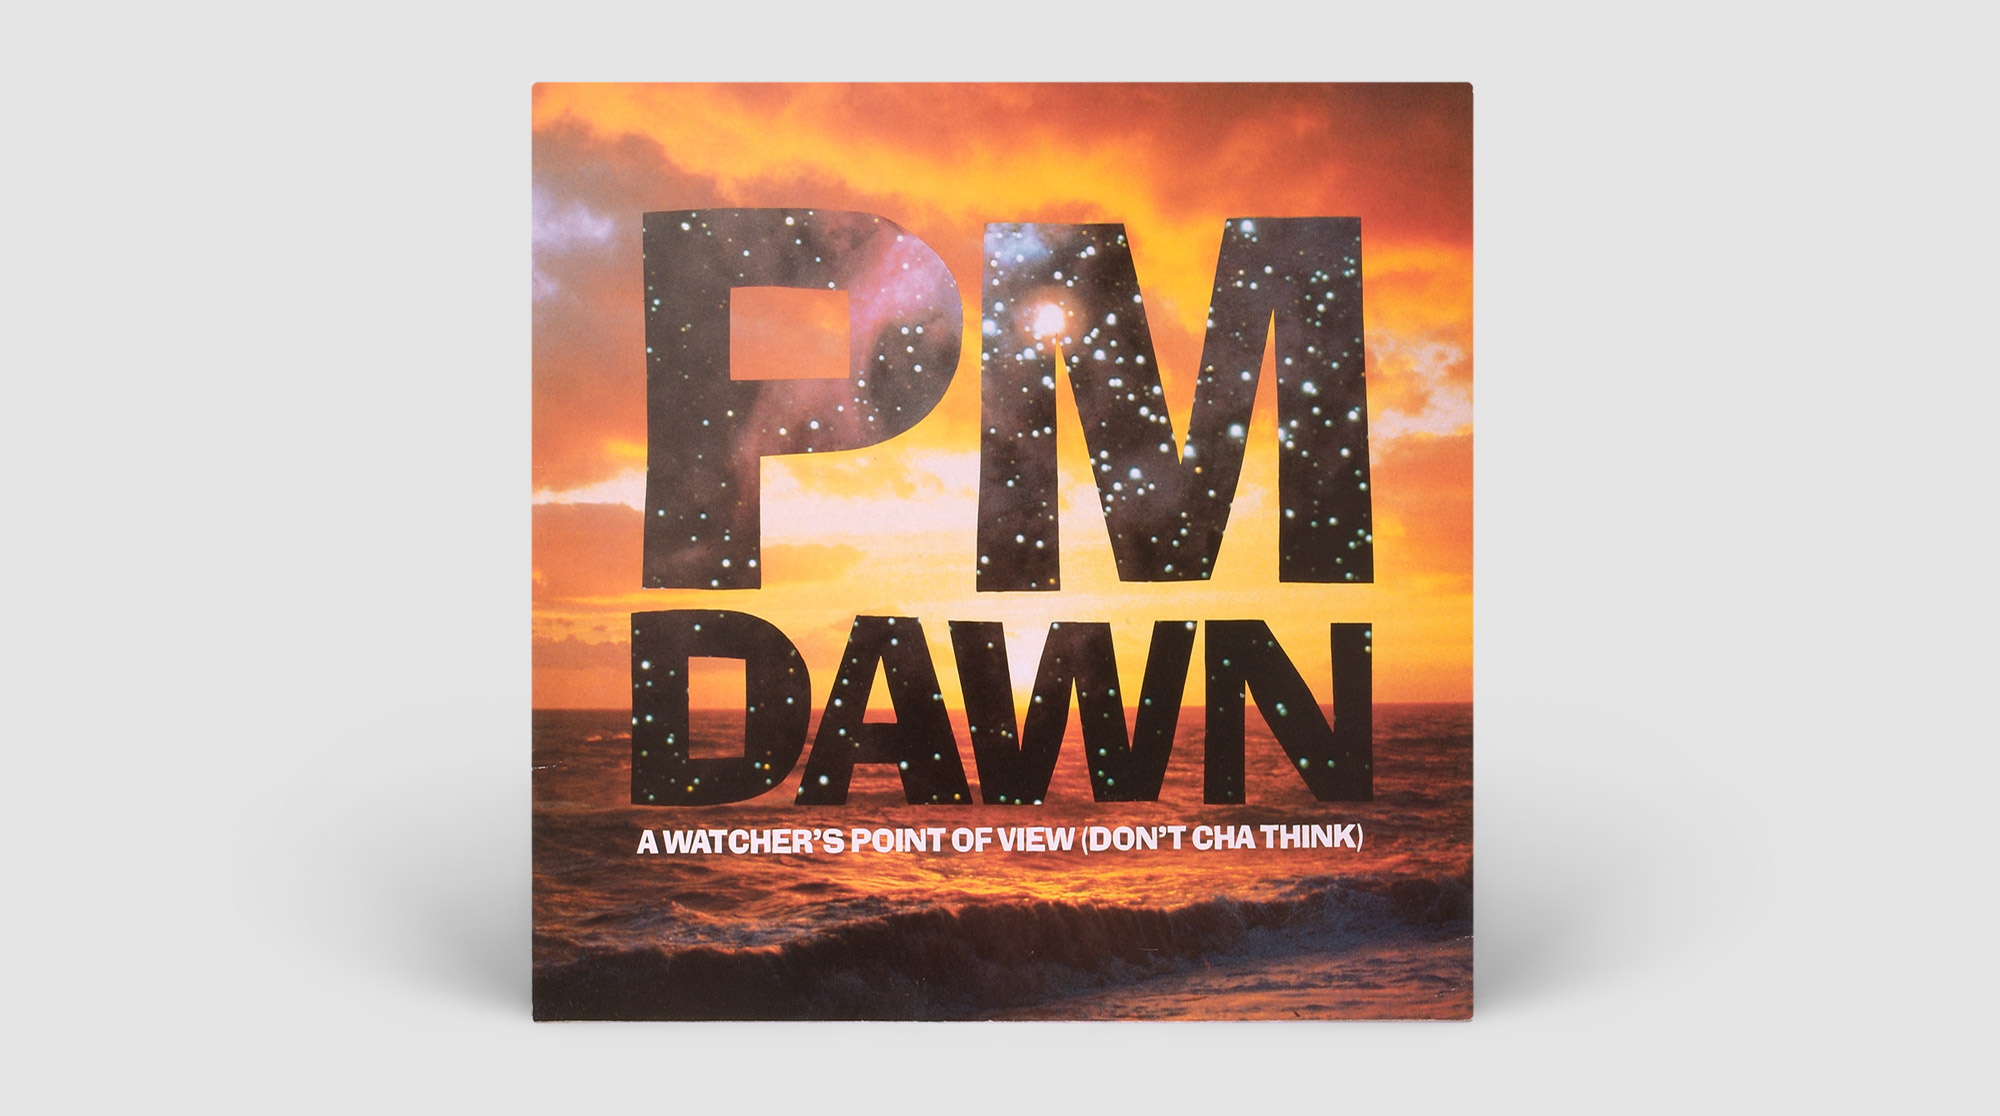 PM Dawn –